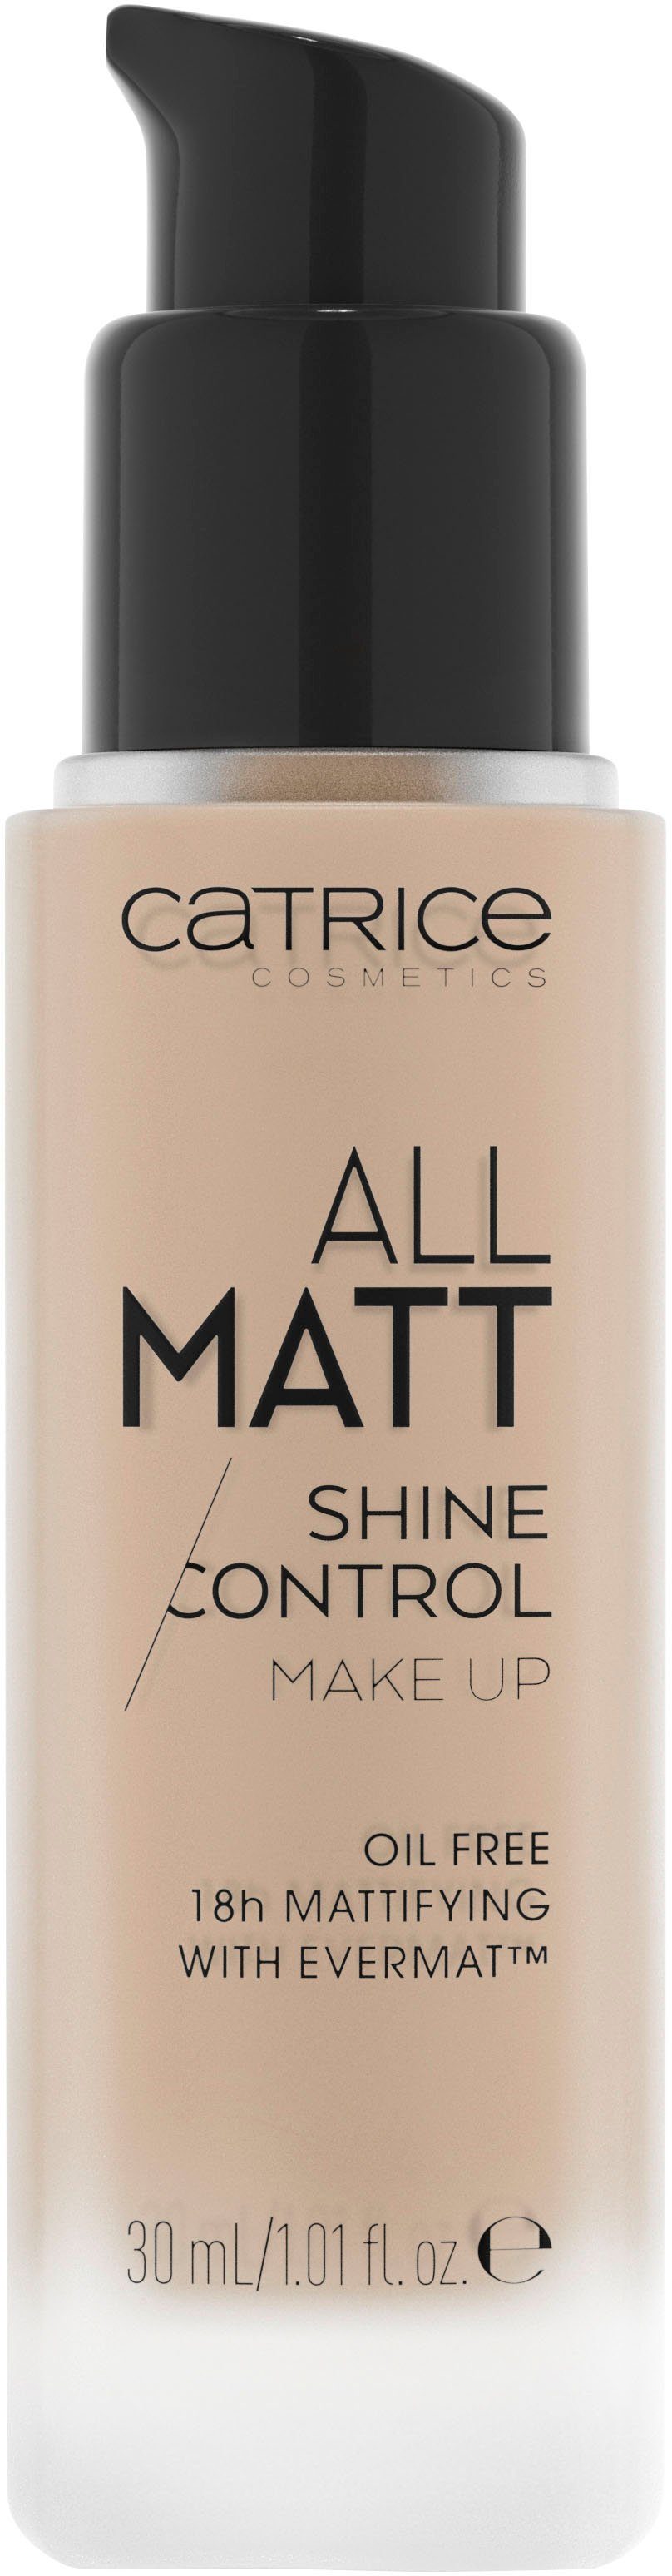 Control Matt Make Foundation Beige Shine Up Cool All Vanilla Catrice